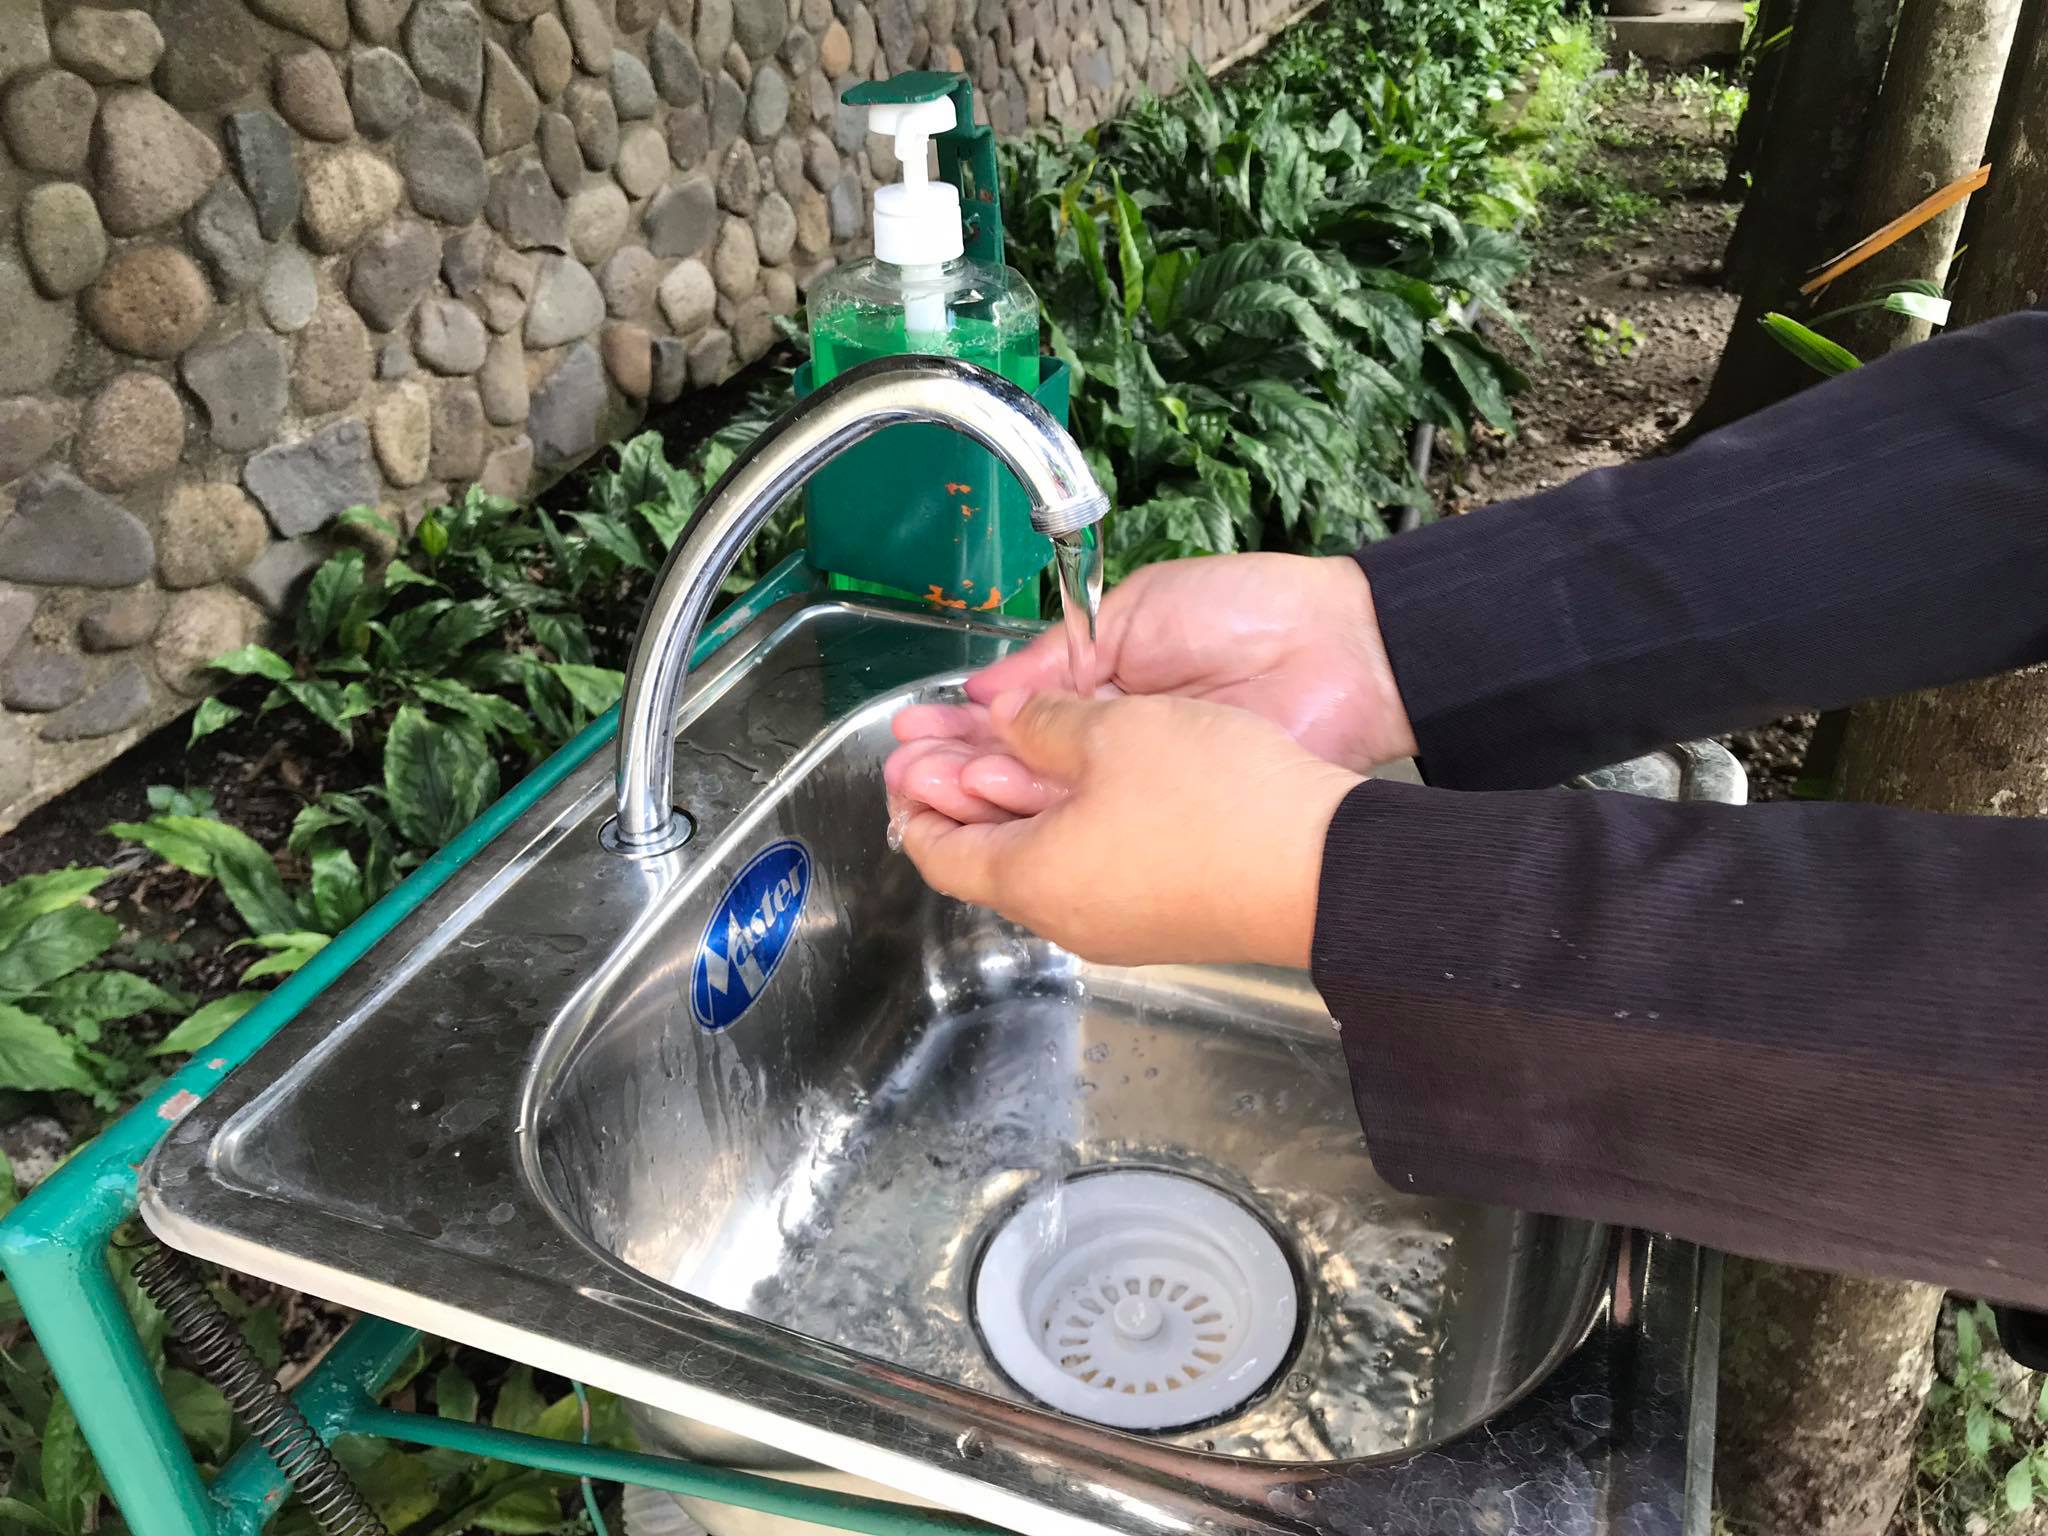 SU installs touch-free handwashing stations at gates